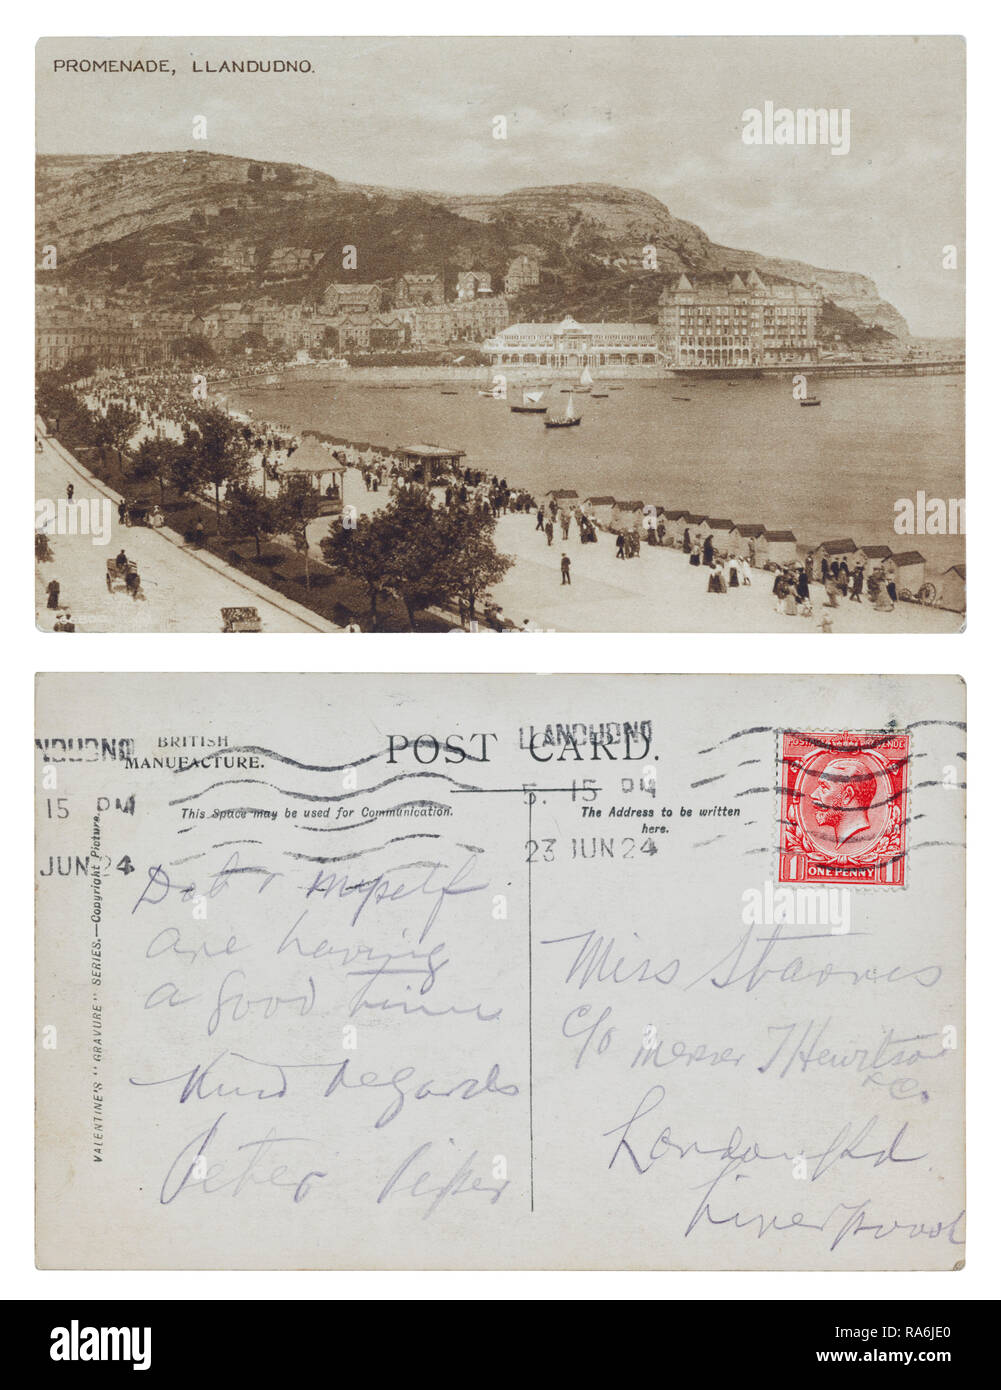 Una postal enviada desde Llandudno Miss Starris Messers Hewitson, J & Co, London Road, Liverpool Foto de stock